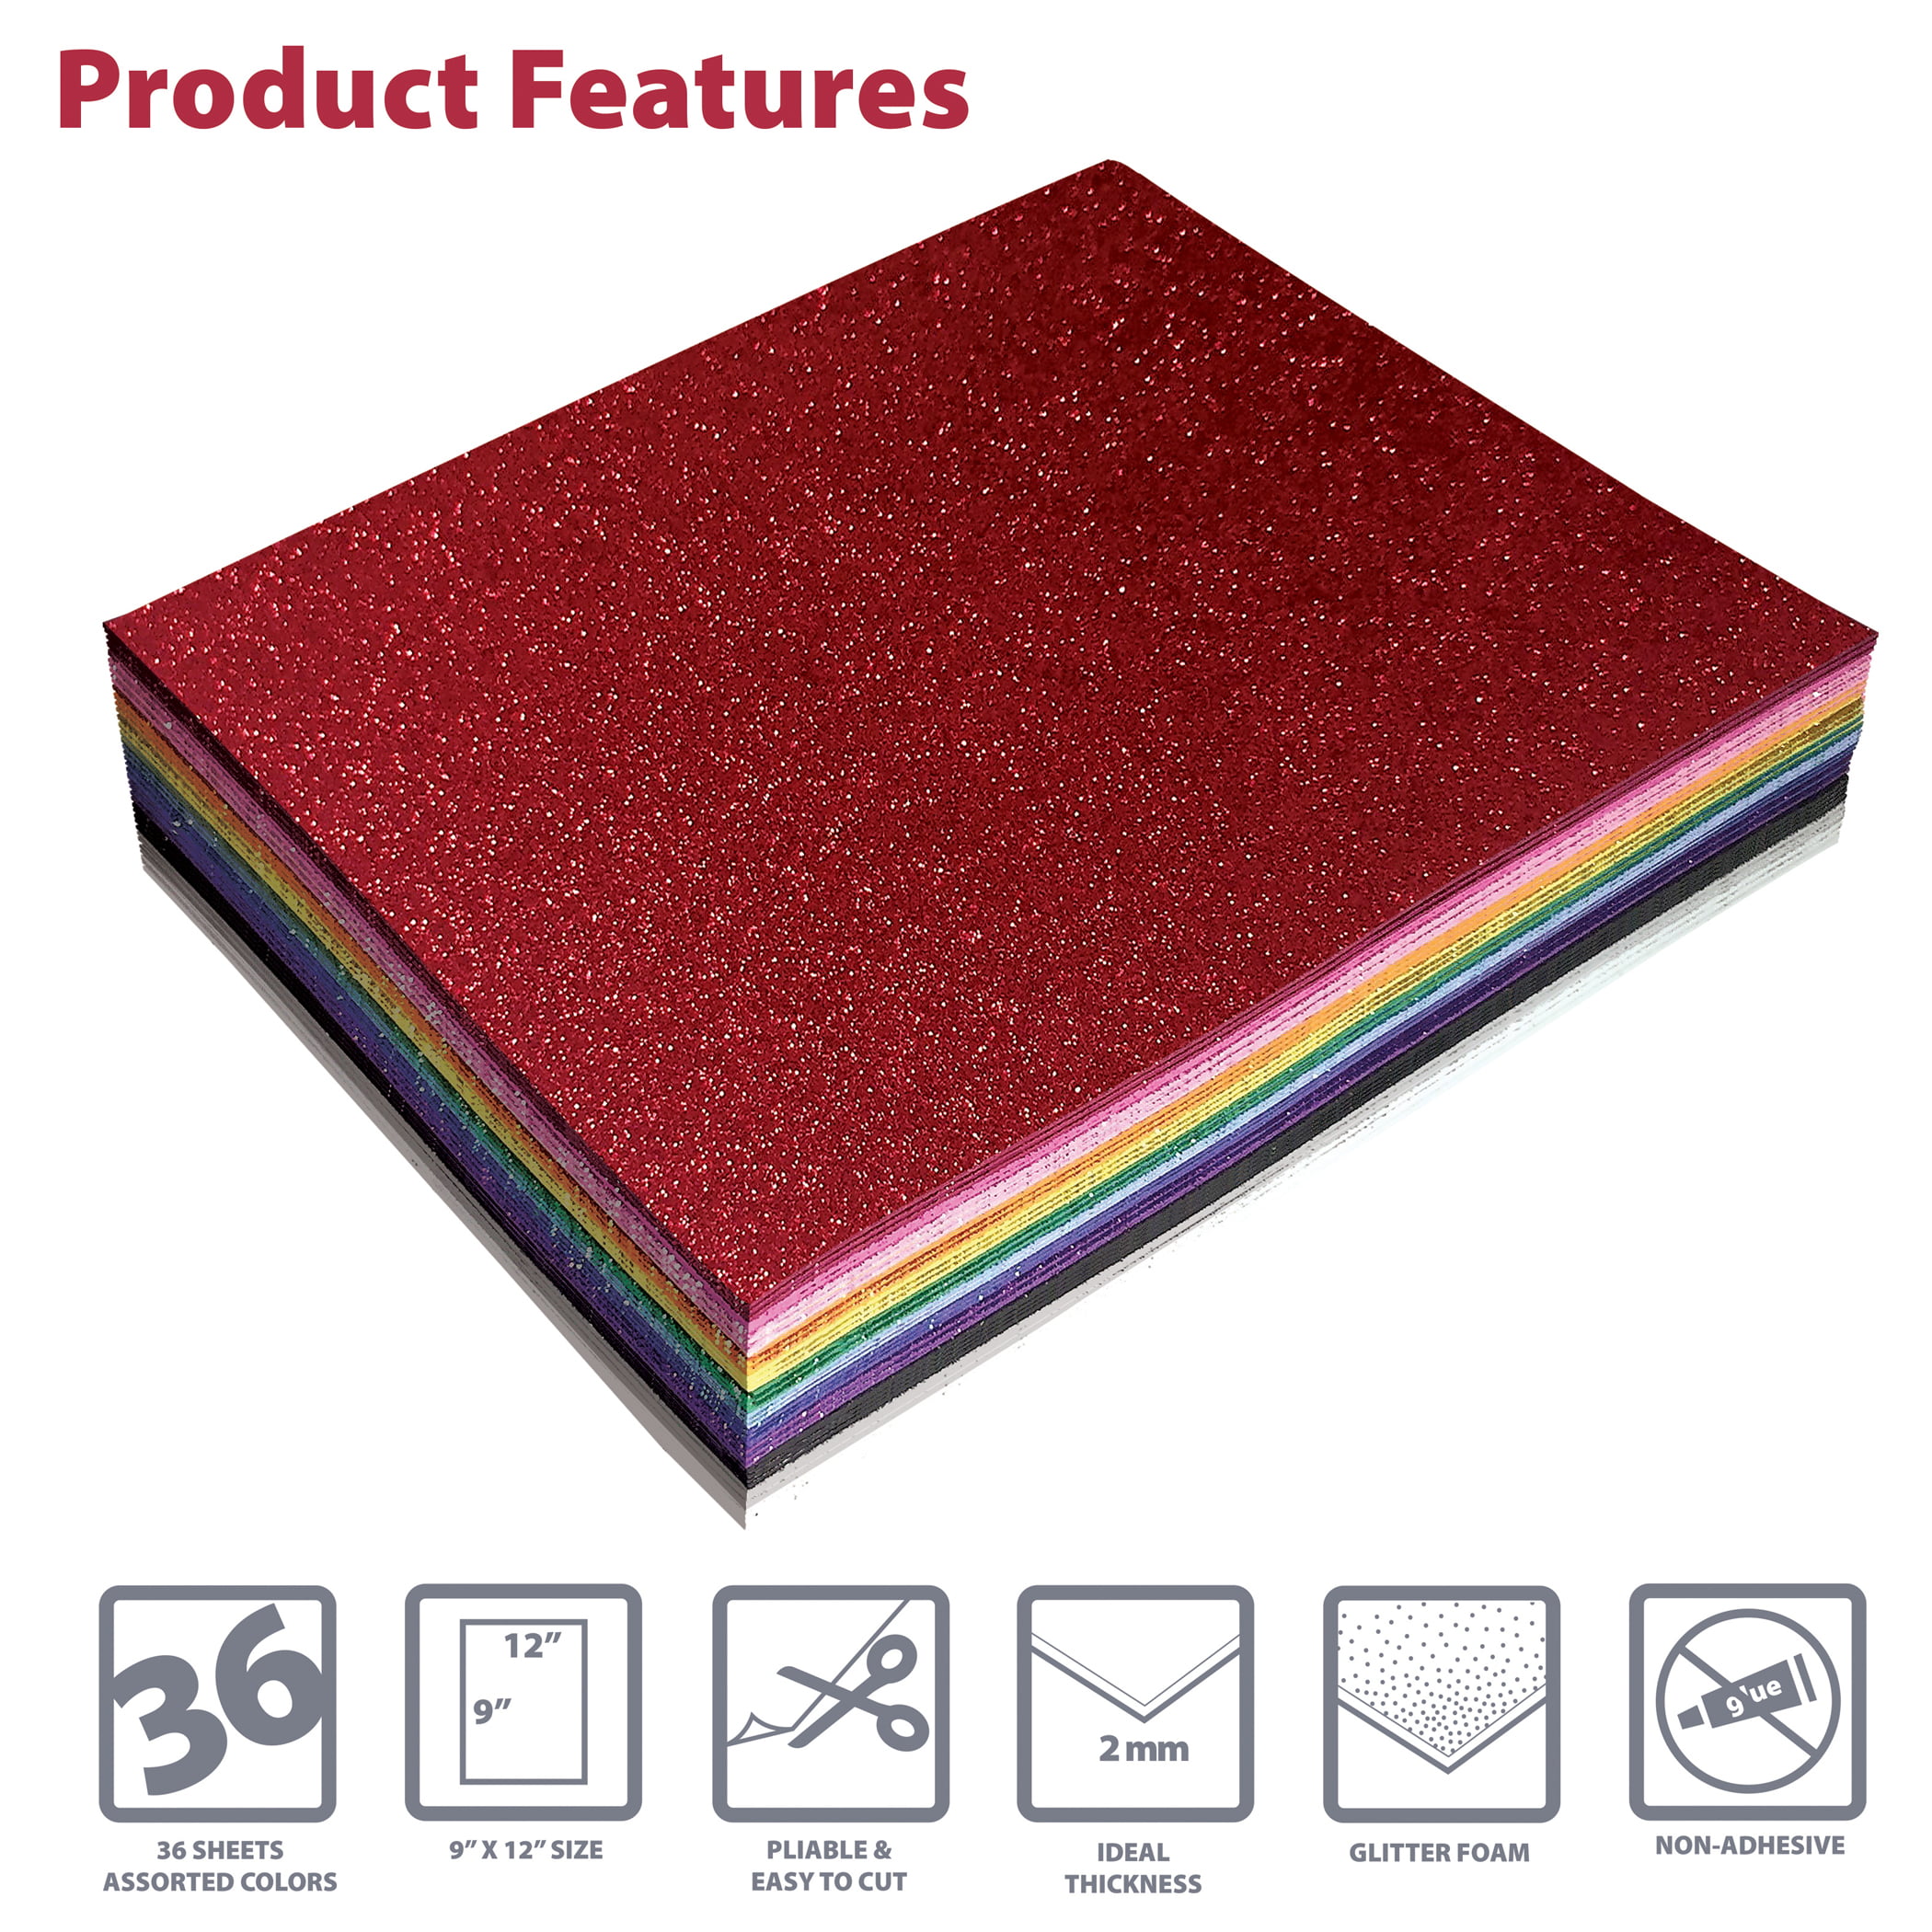 Wonderfoam Non-Toxic Foam Sheet, 9 X 12 in, Assorted Bright Color, Set of 10